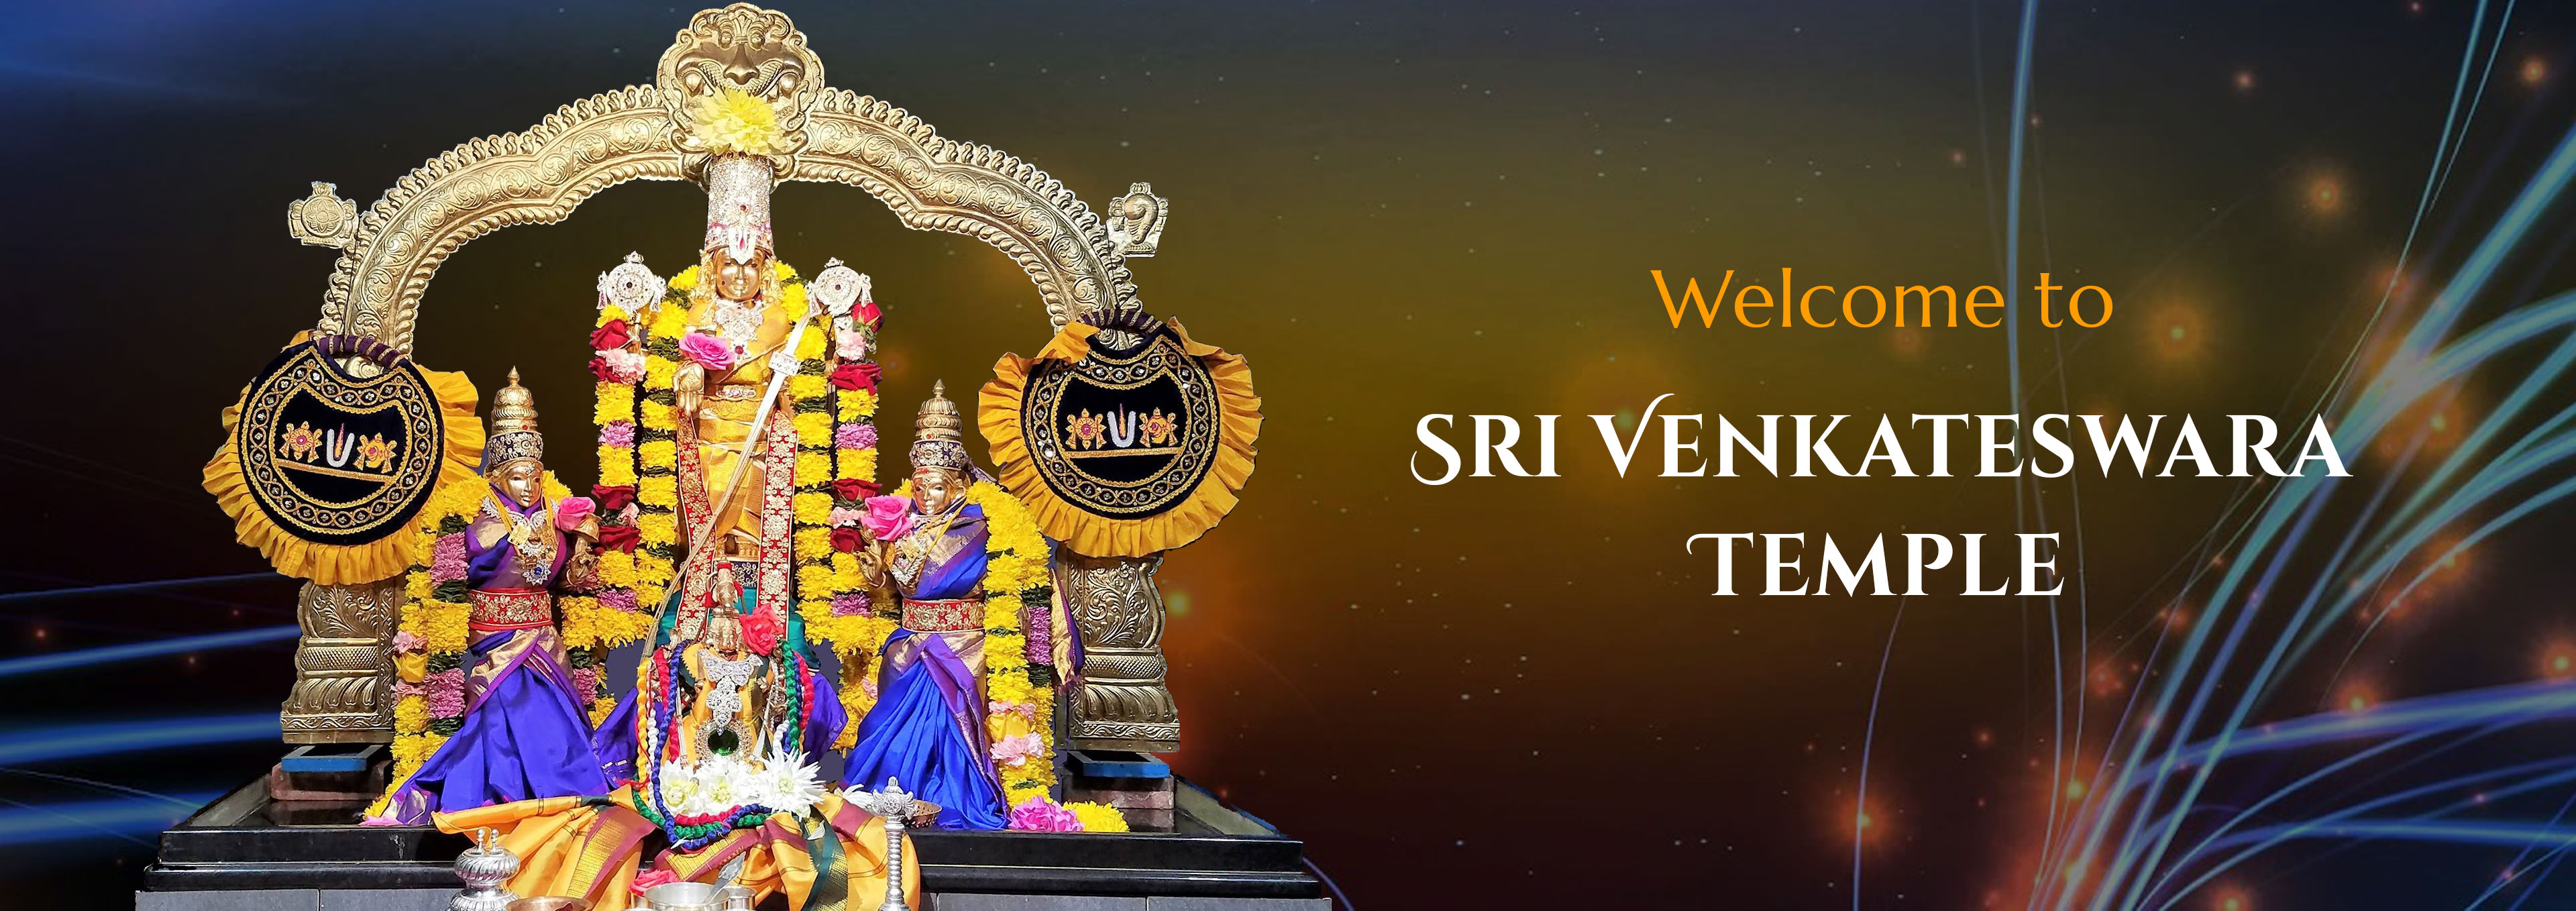 VEDA Sri Venkateswara Temple Hindu Temple Home